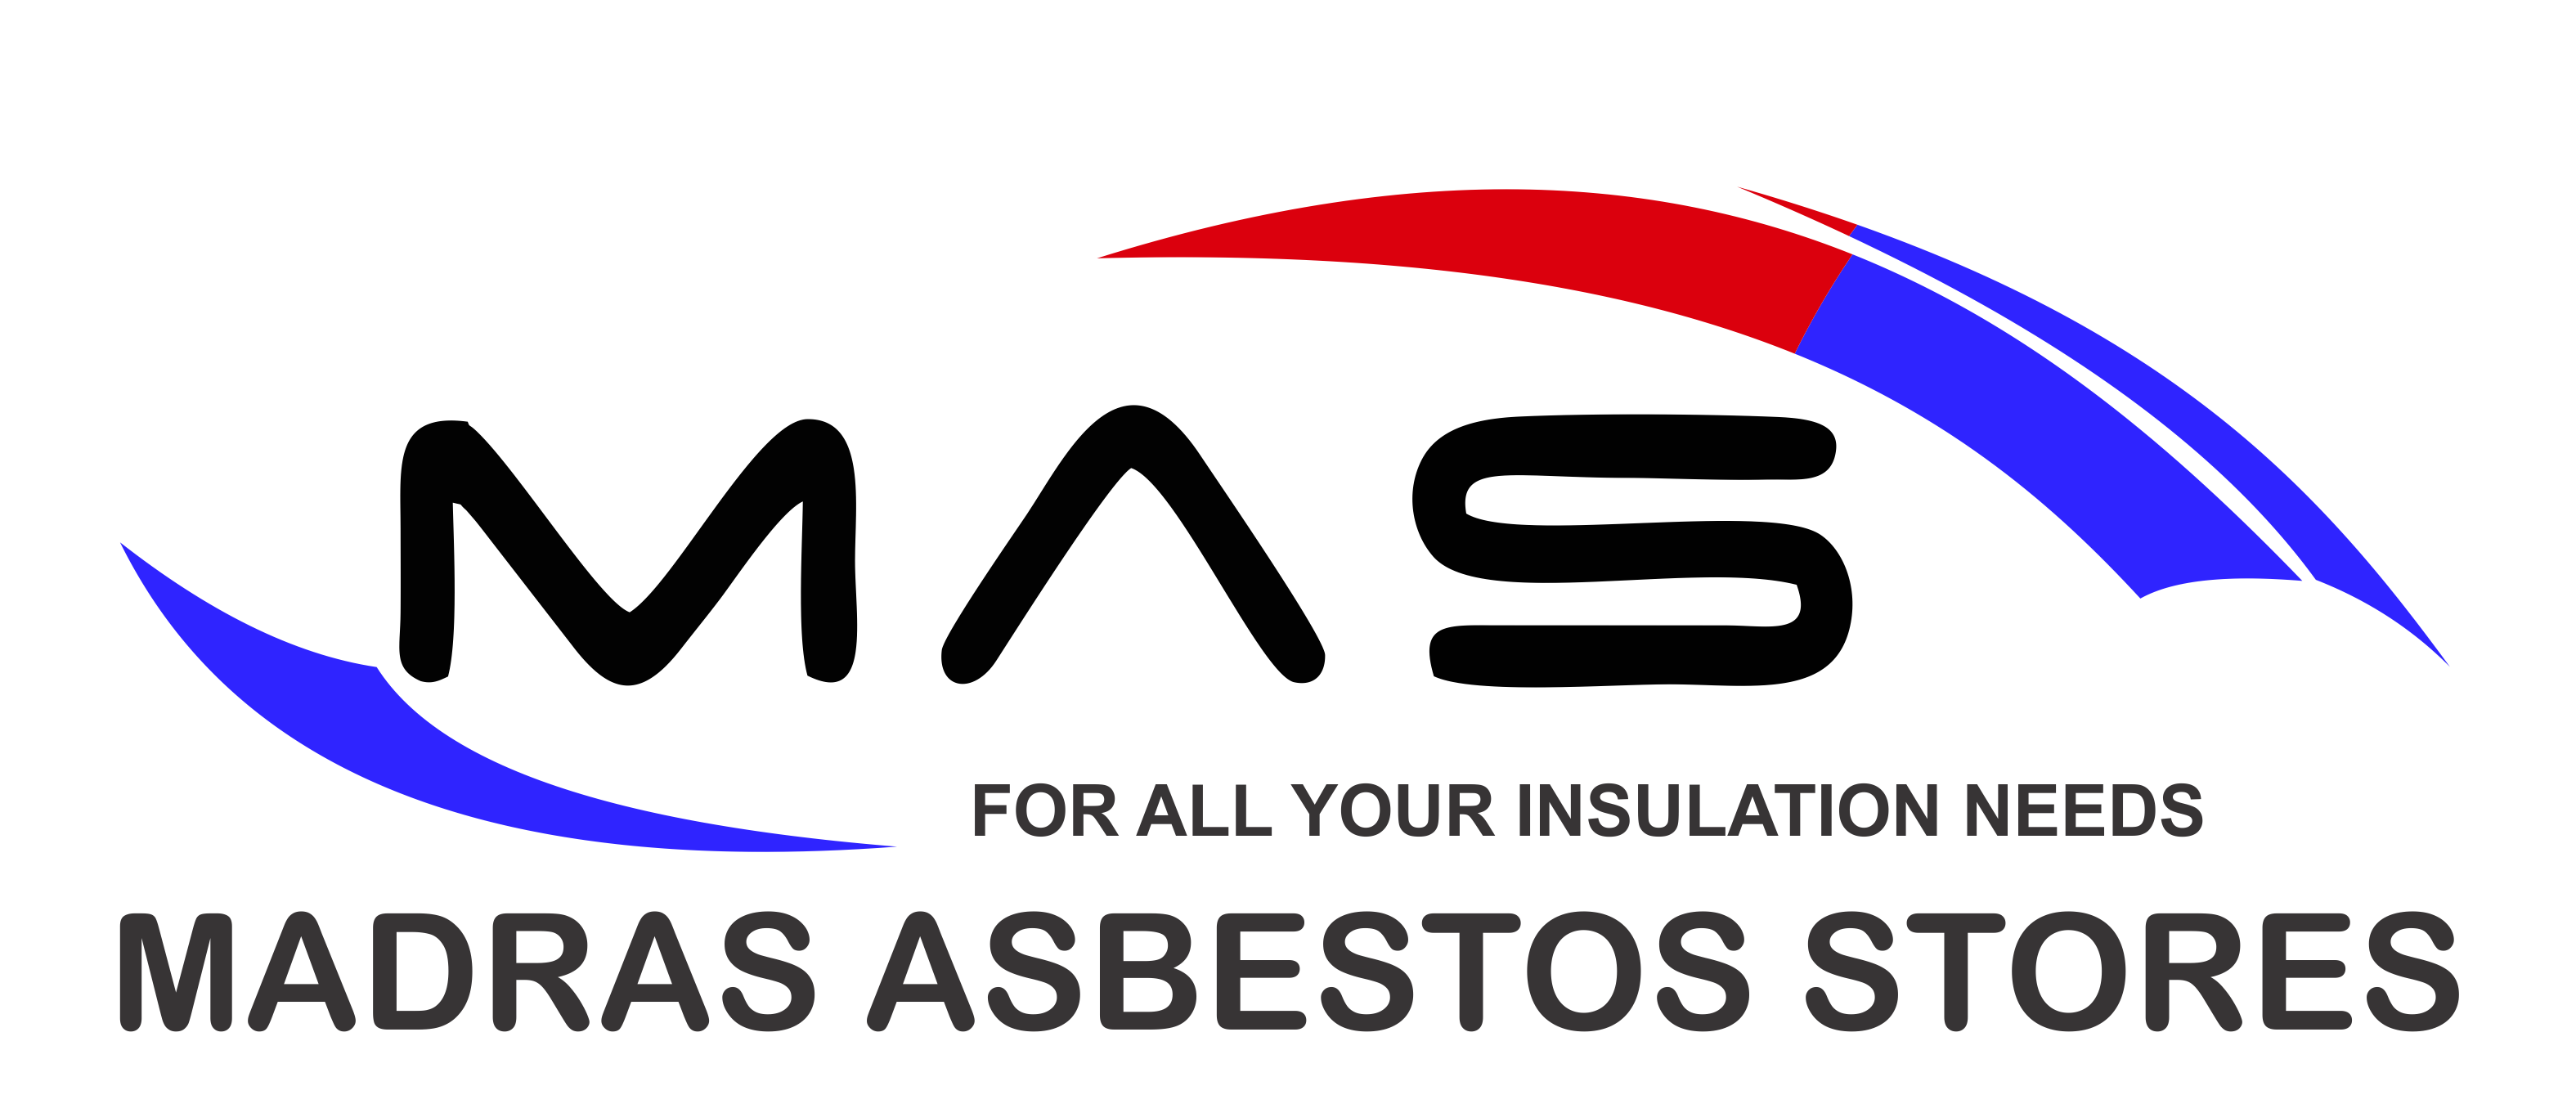 Madras Asbestos Stores